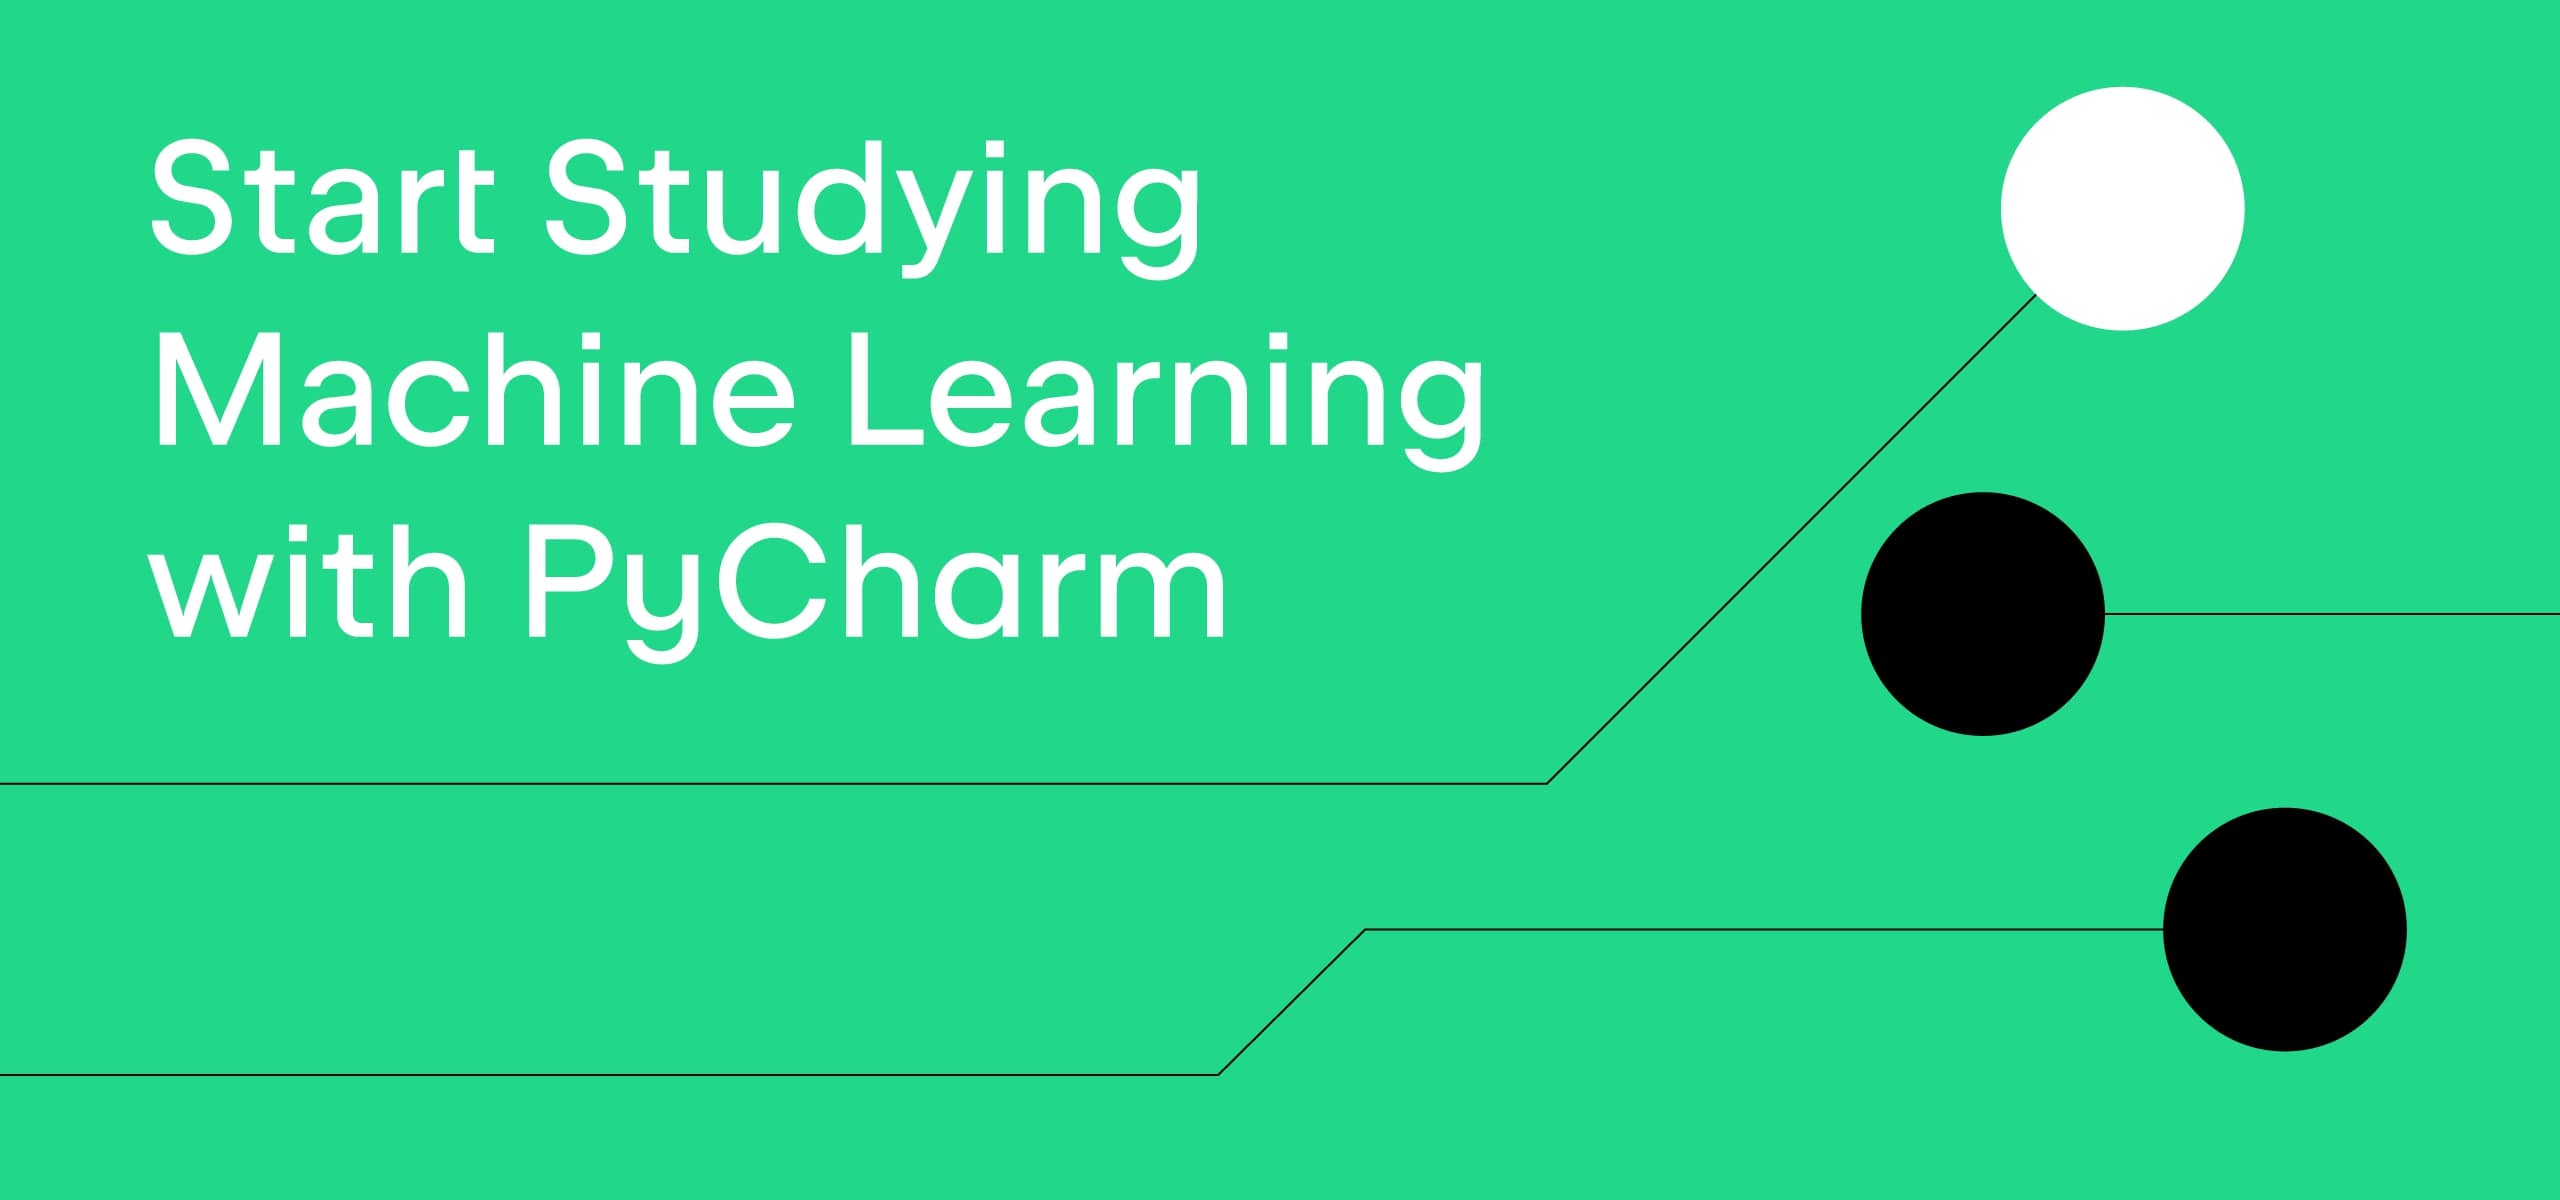 Học Machine Learning với PyCharm trên JetBrains Academy